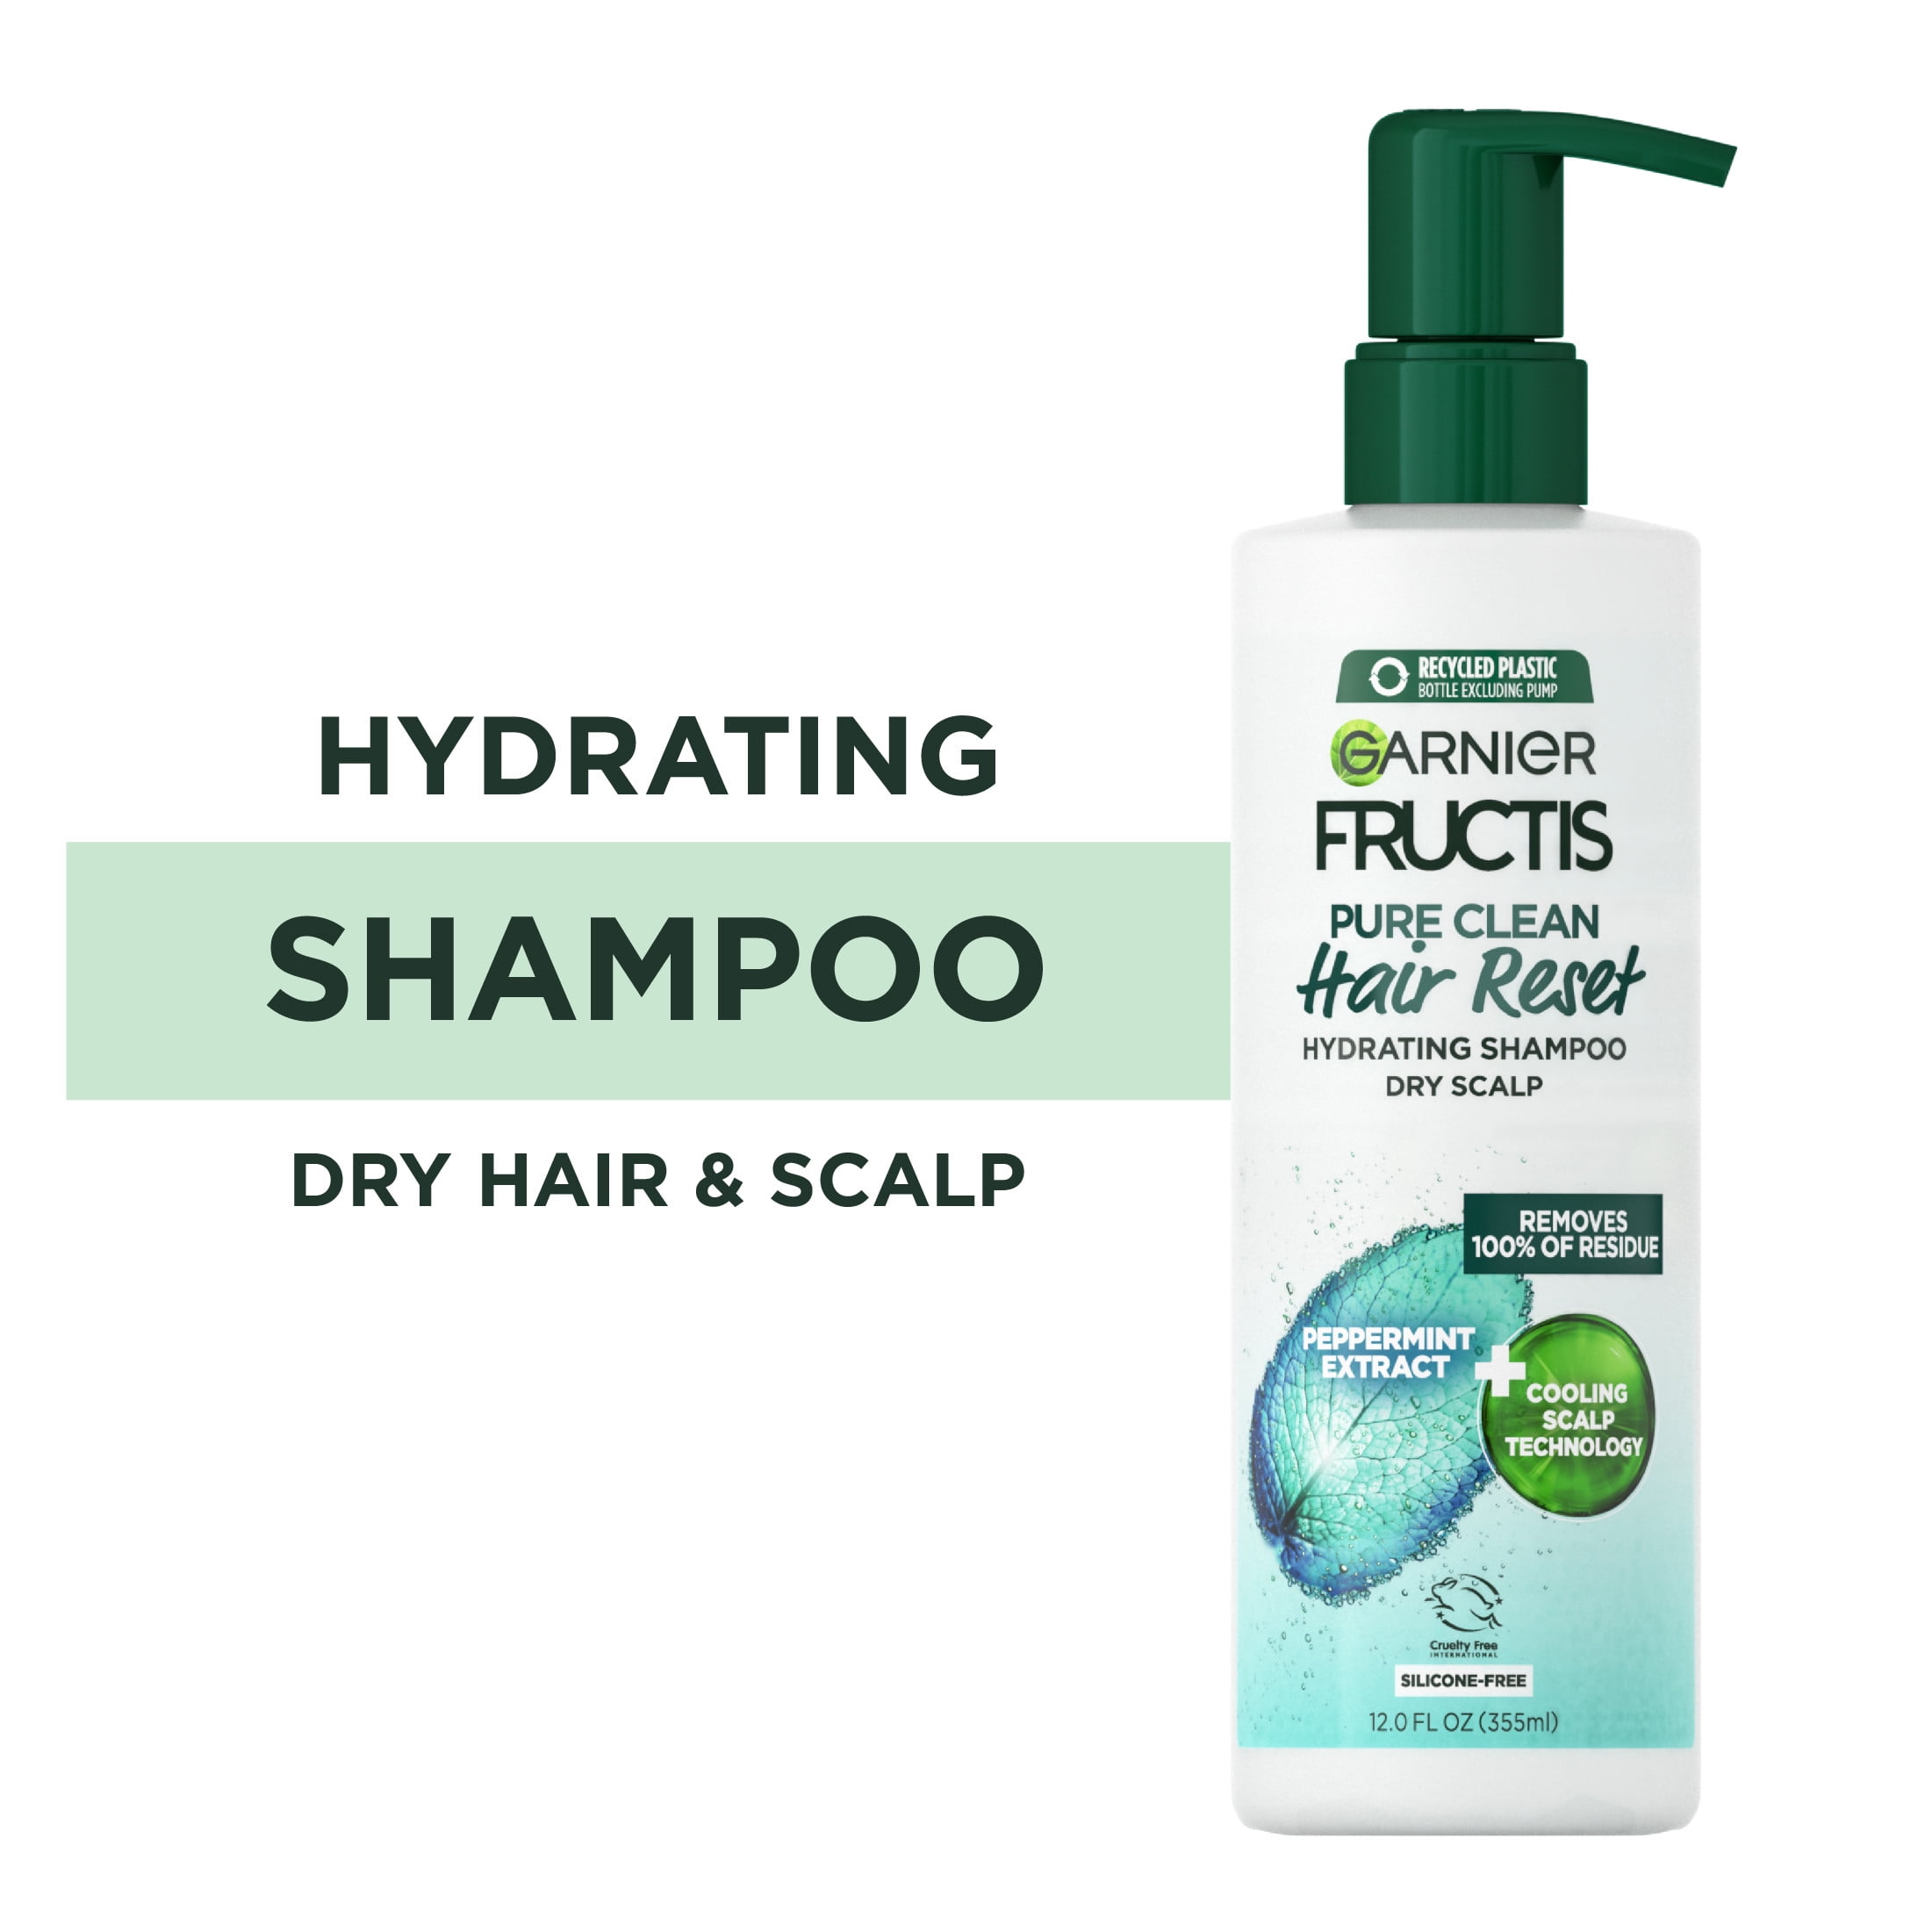 Garnier Fructis Pure Clean Hair Reset Hydrating Shampoo, Dry Scalp, 12 fl  oz 